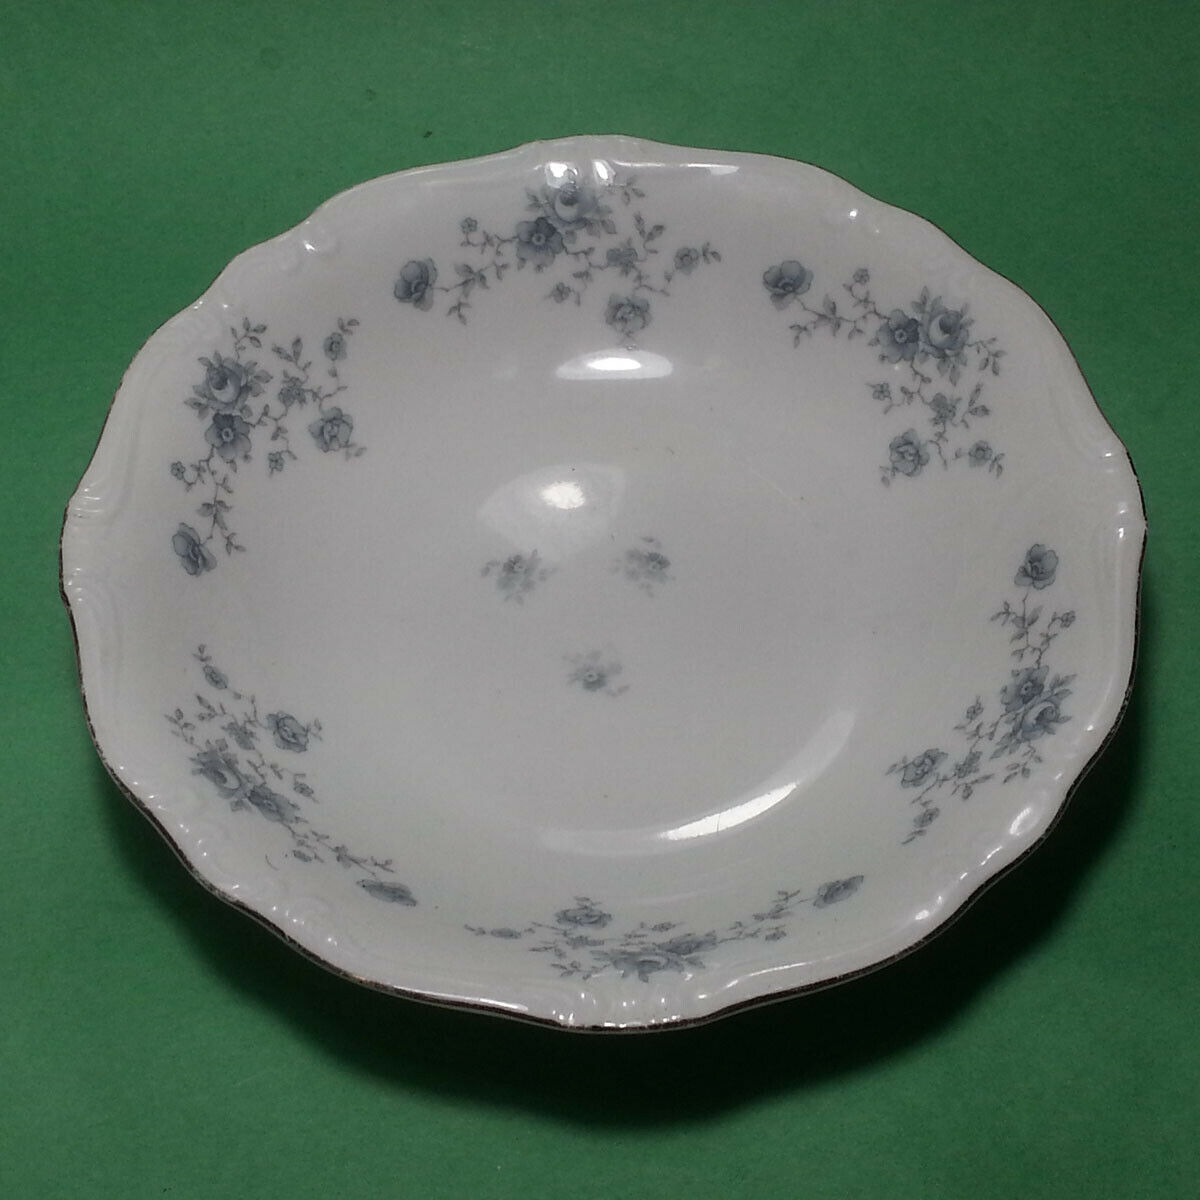 Primary image for Johann Haviland Bavaria Porcelain Bowl with Silver Trim 7.5" In diameter 